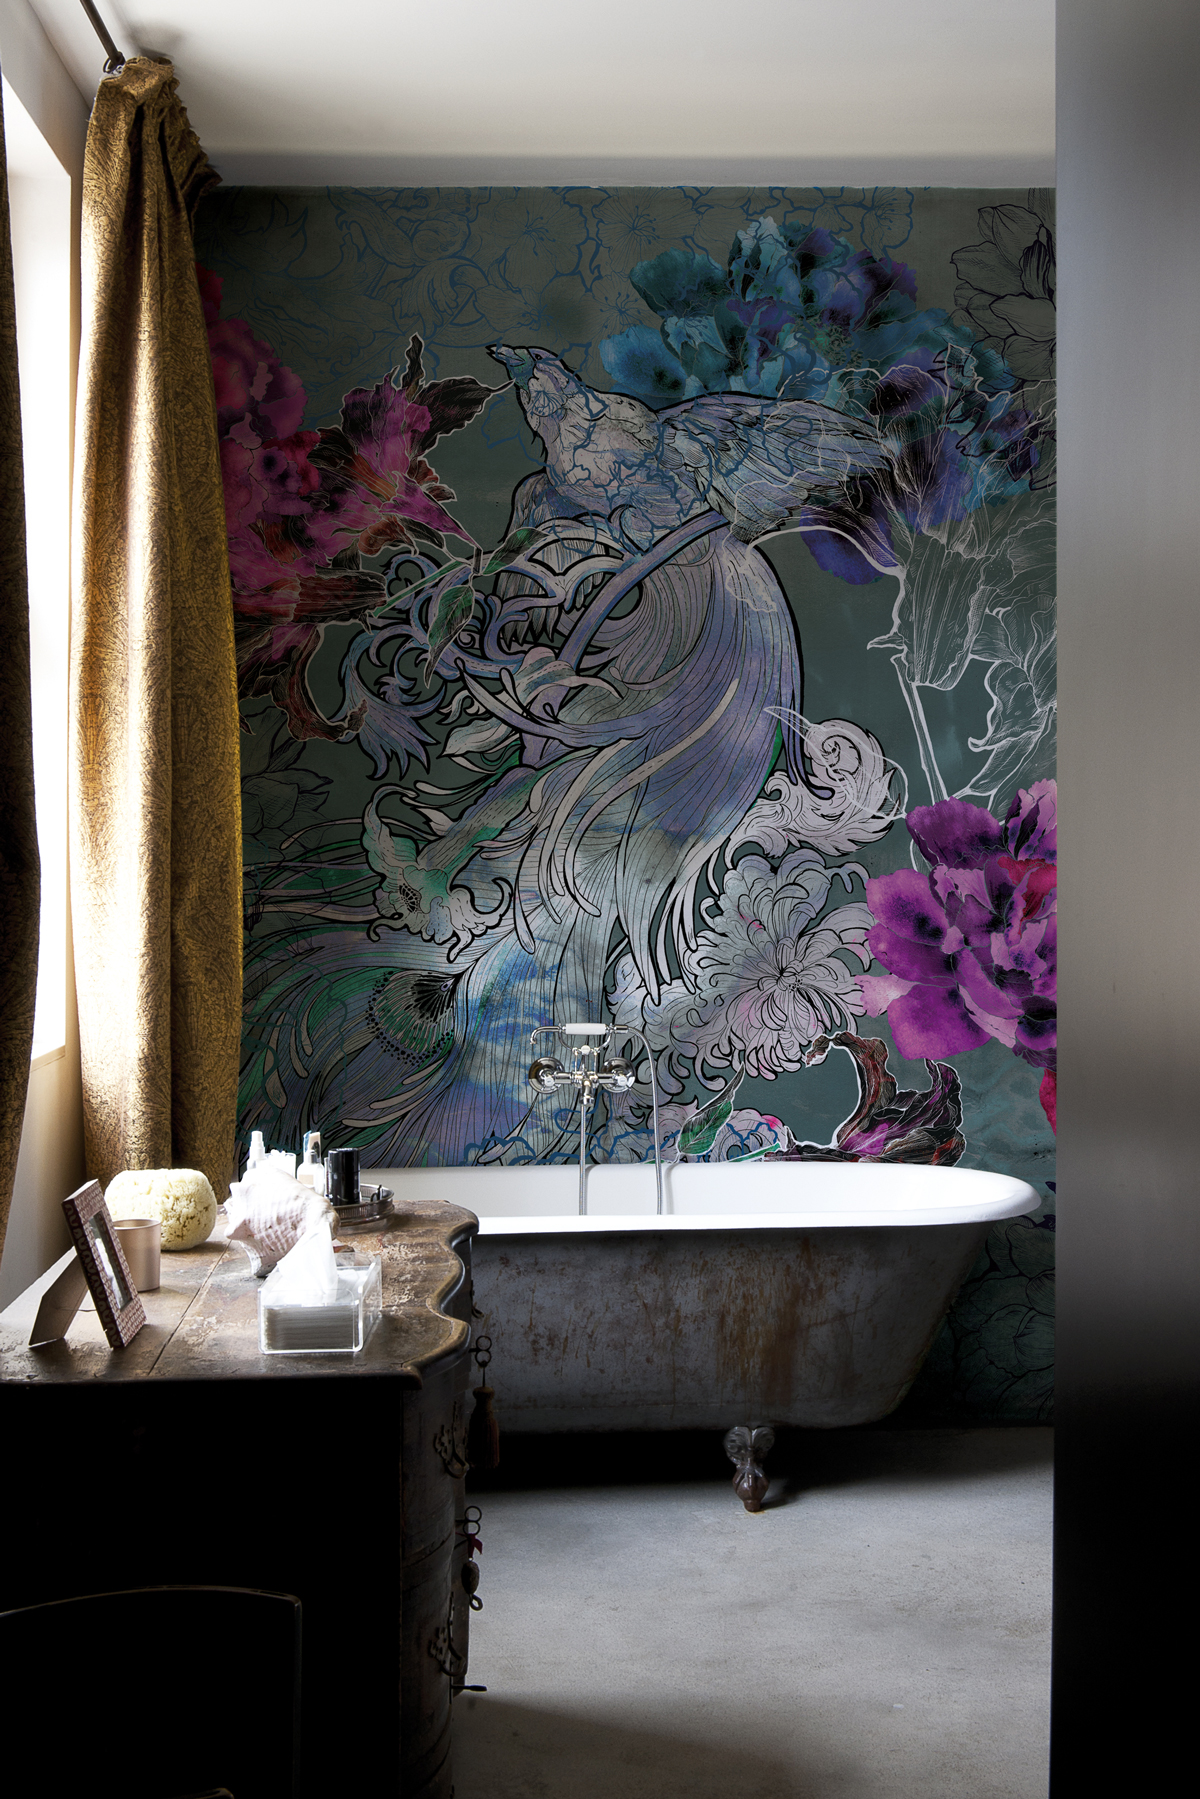 Using Waterproof Wallpaper | Bathroom Inspiration